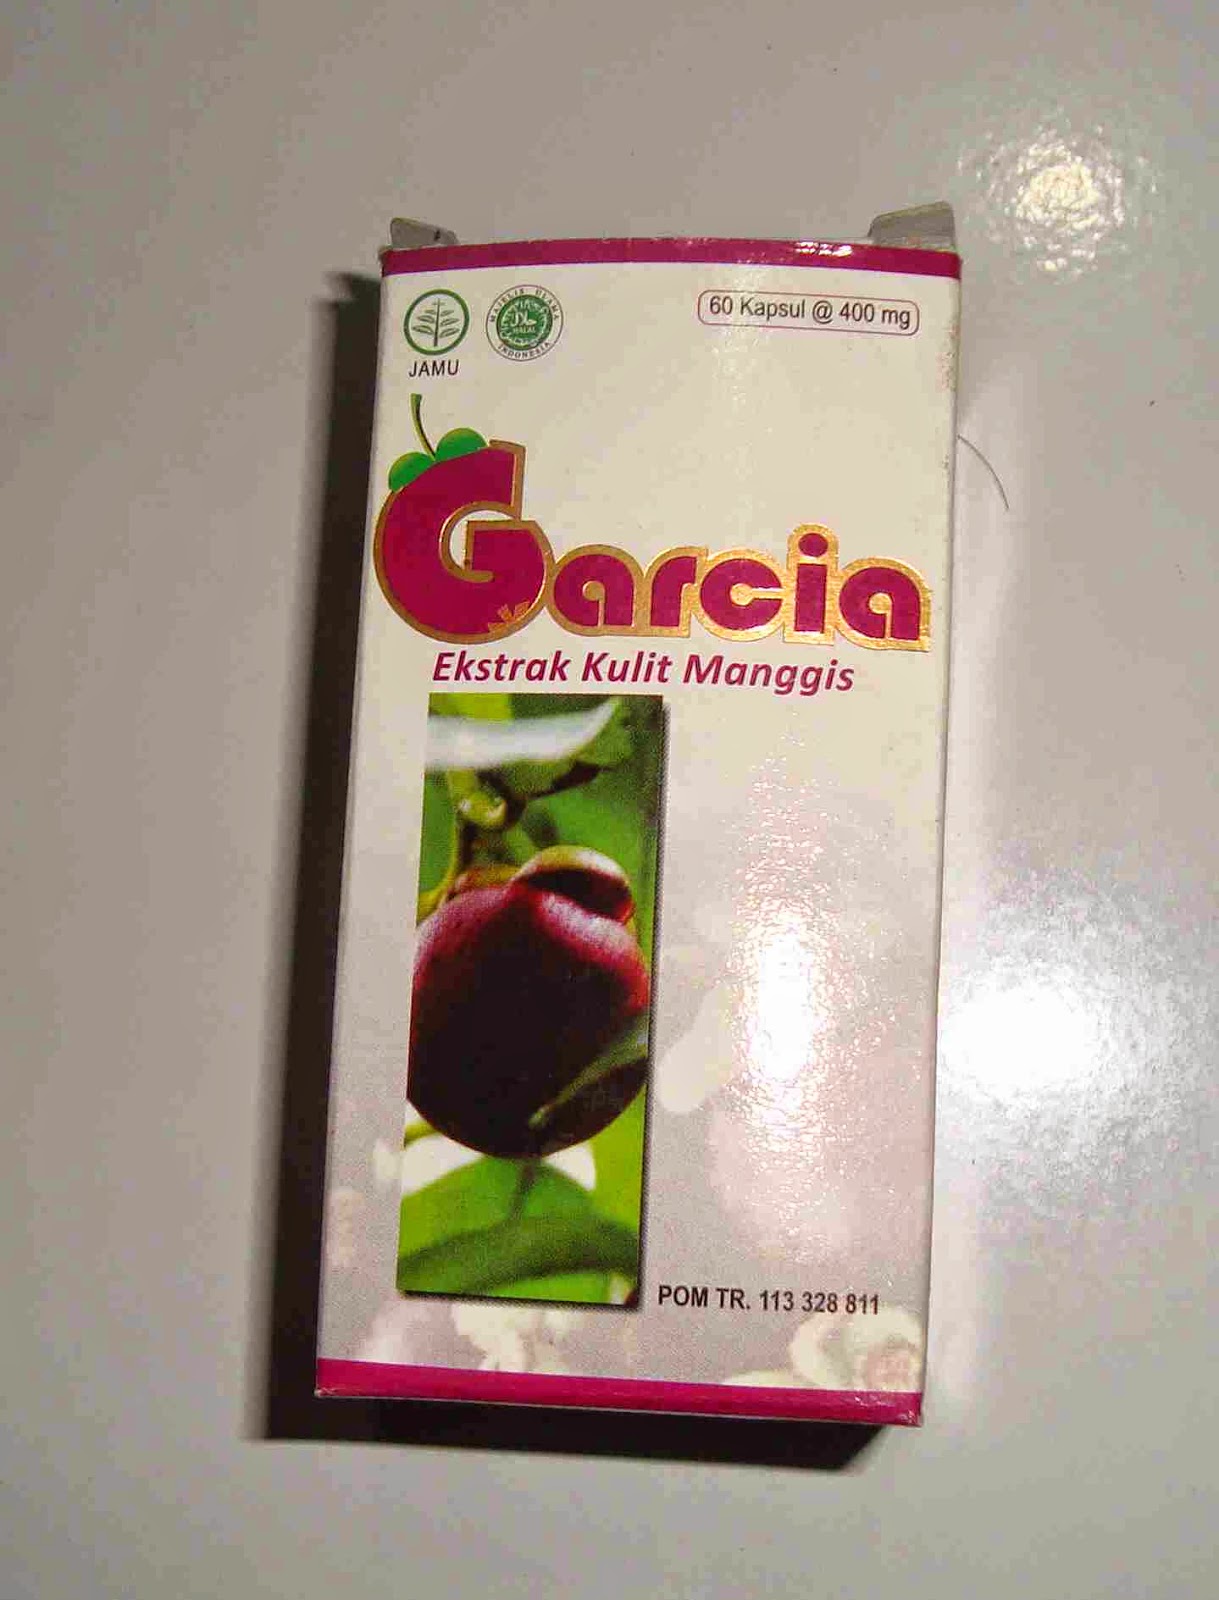 19 Manfaat dan Kegunaan Garcia Kapsul Ekstrak Kulit Manggis - Obat